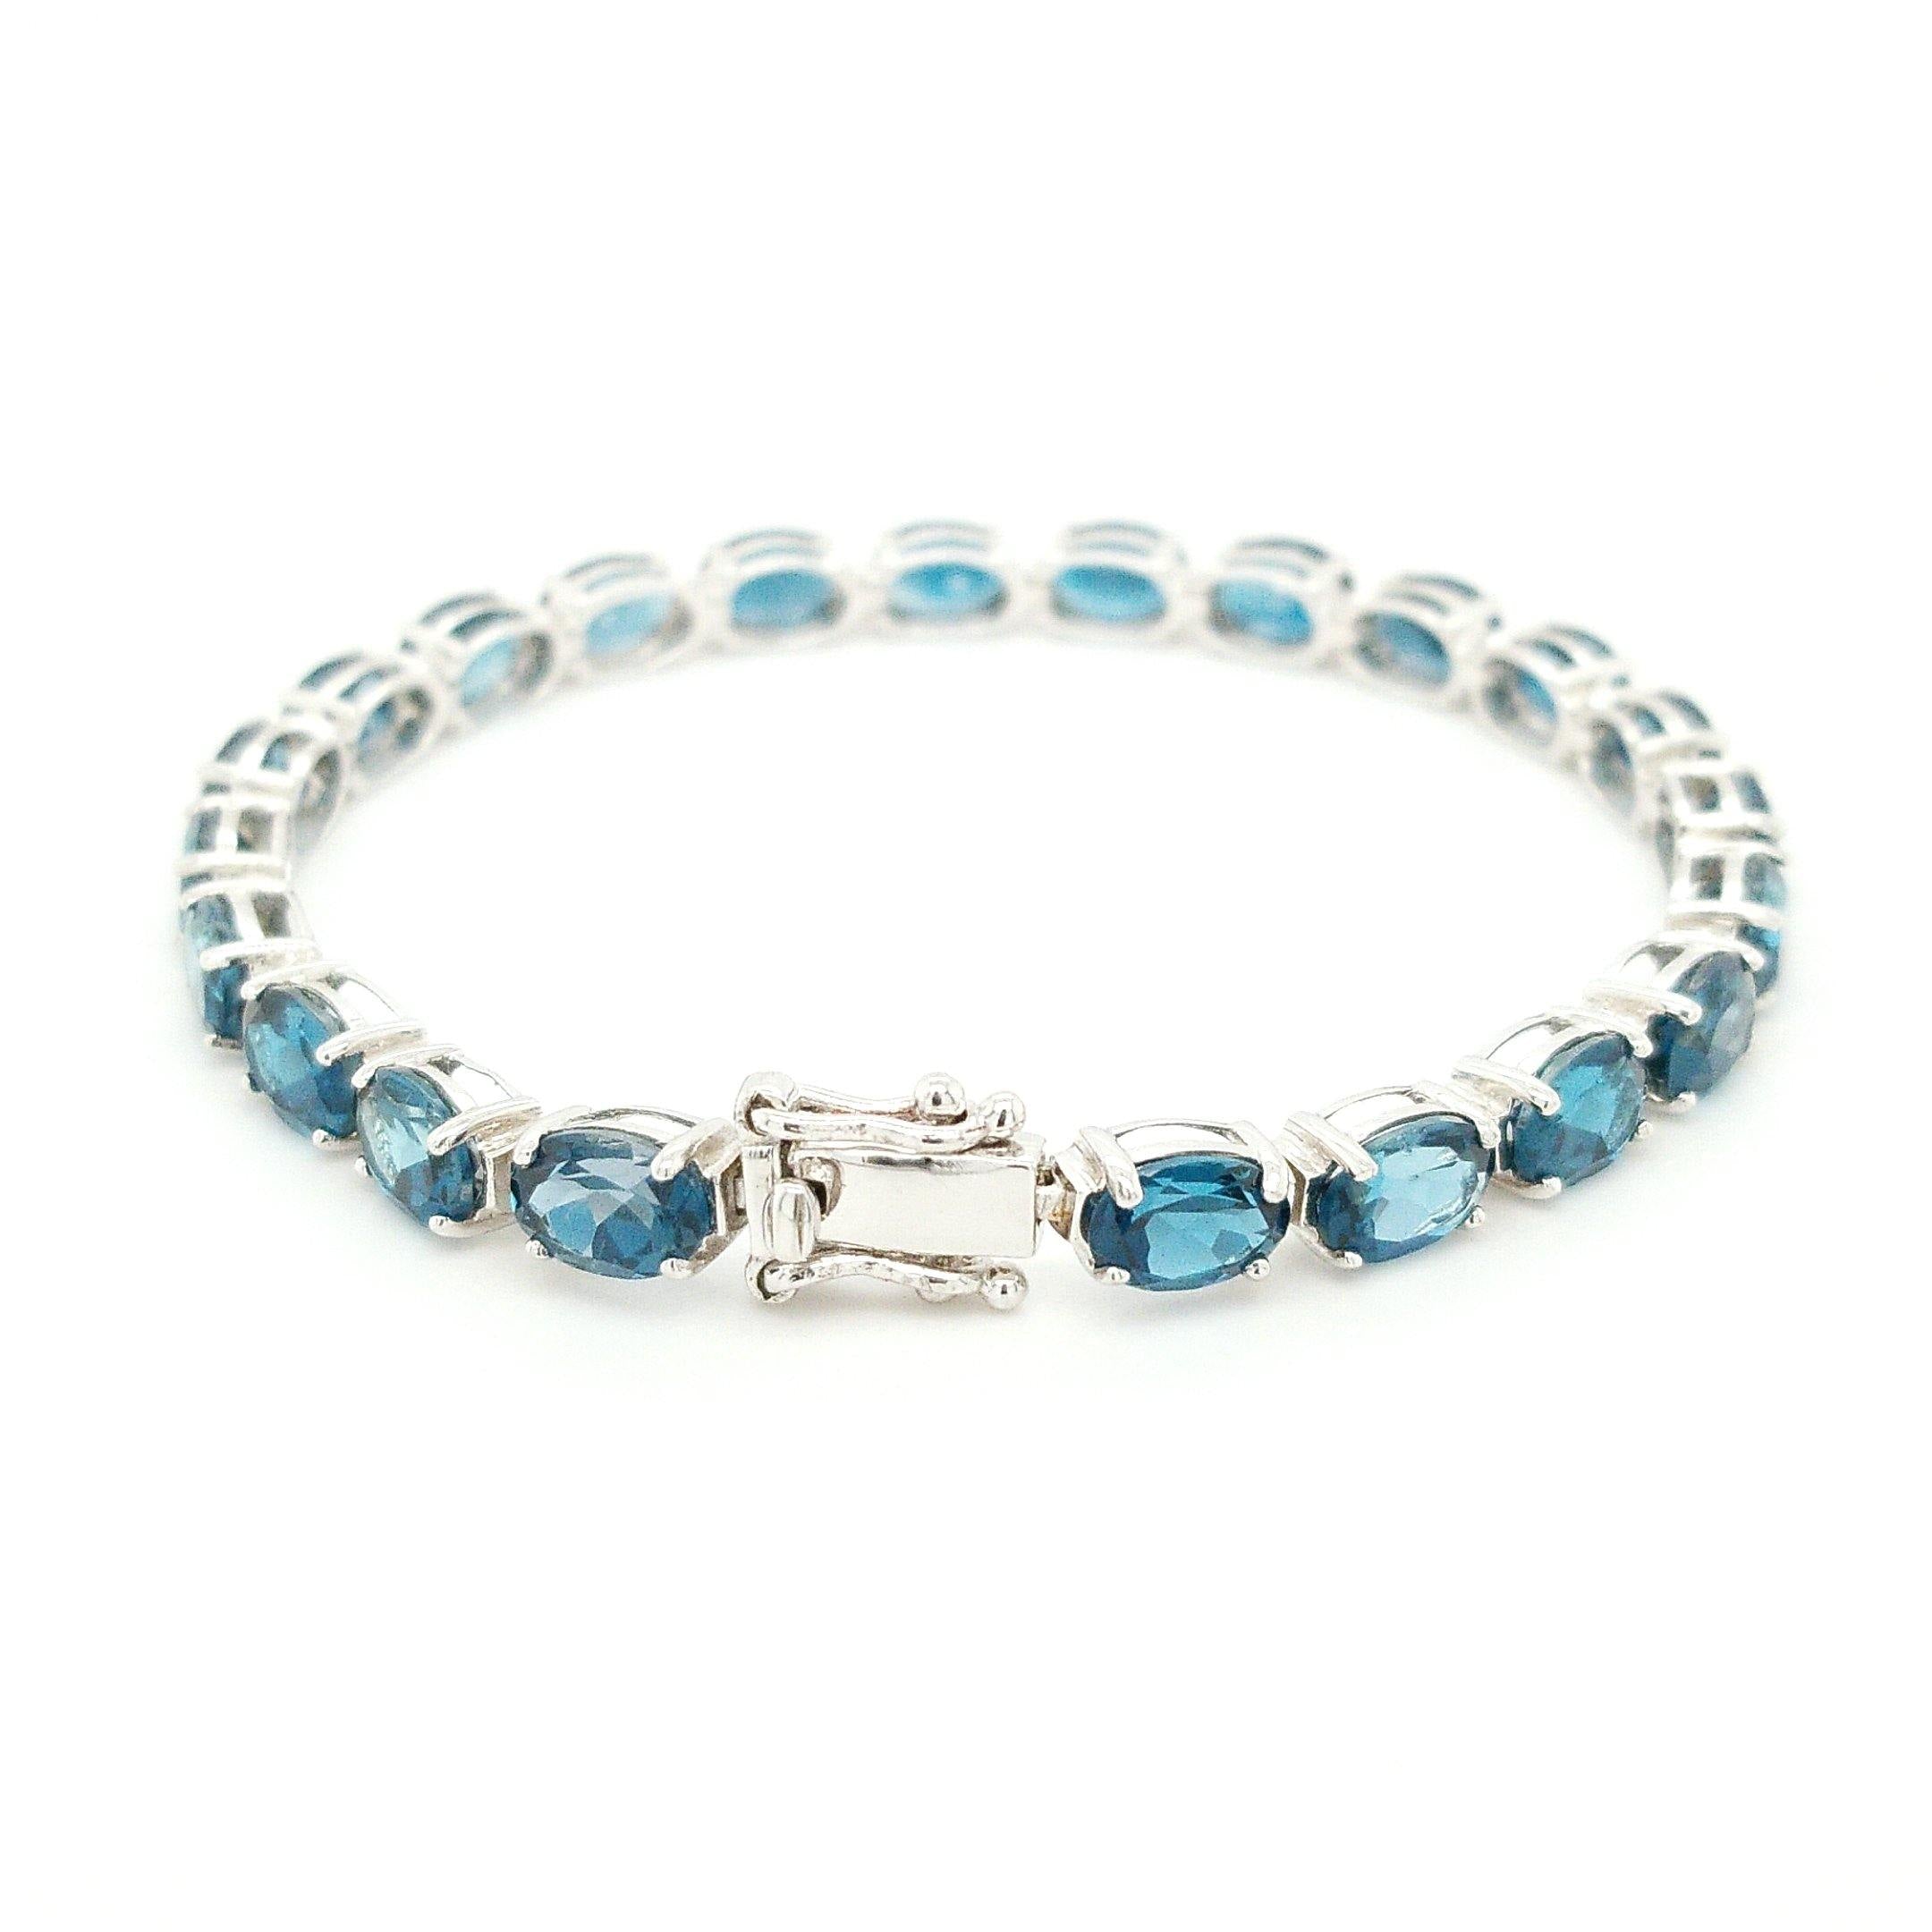 “The Londoner” - London Blue Topaz Sterling Silver Bracelet - The Rutile Ltd